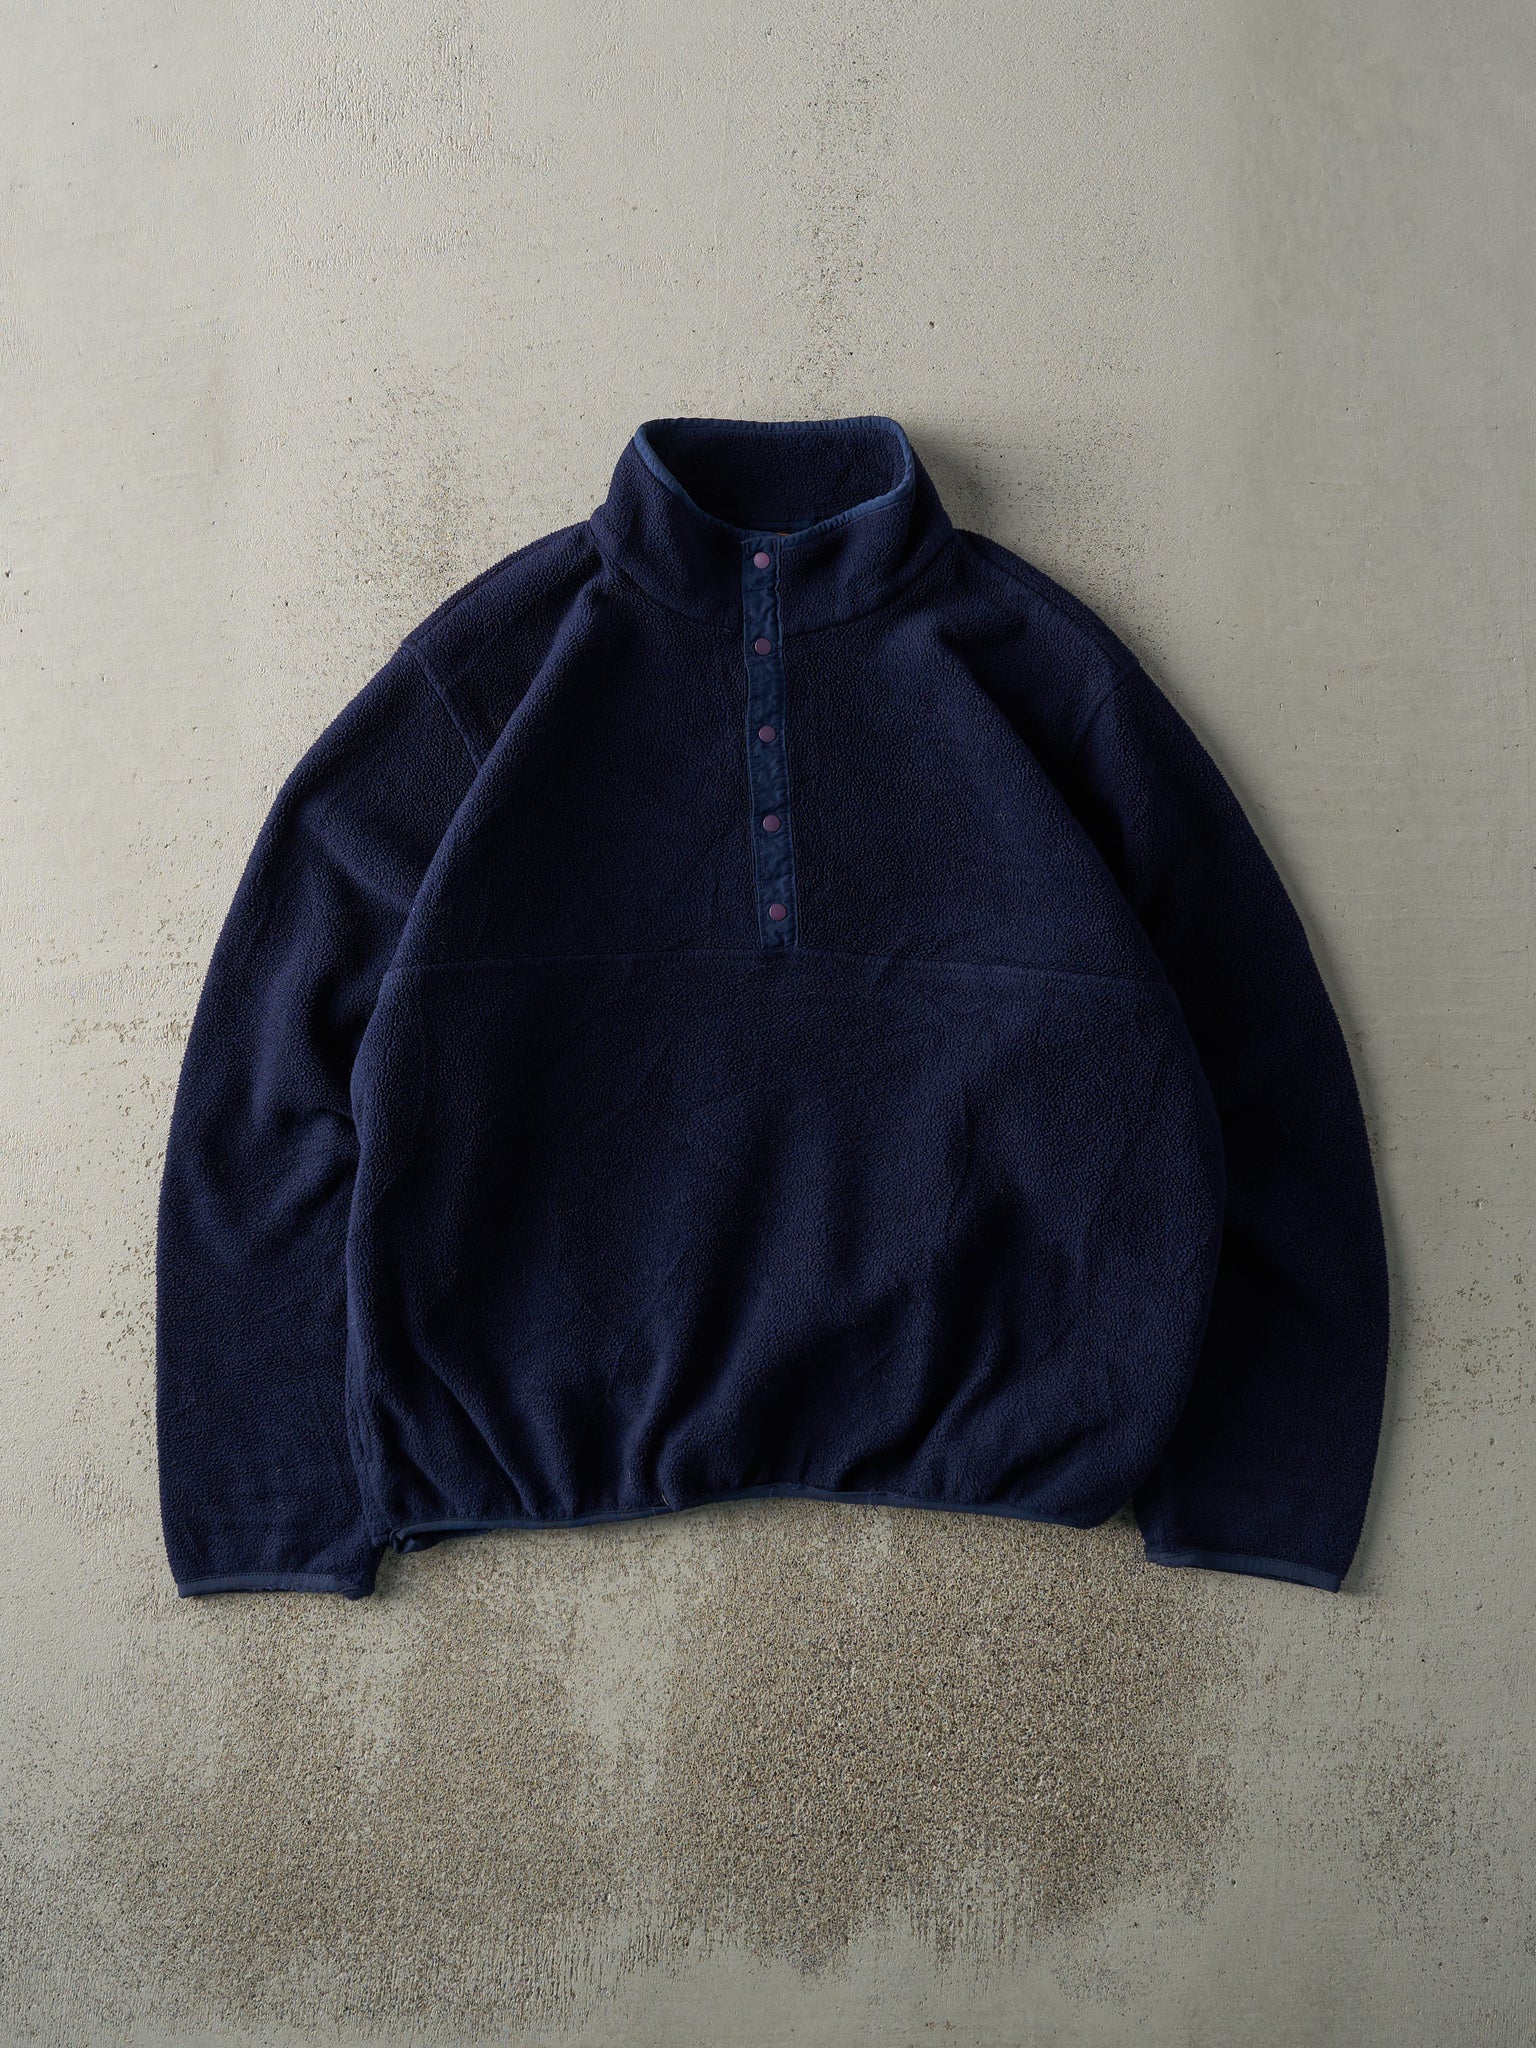 Vintage 90s Navy Blue LL Bean Quarter Button Fleece Sweatshirt (L)